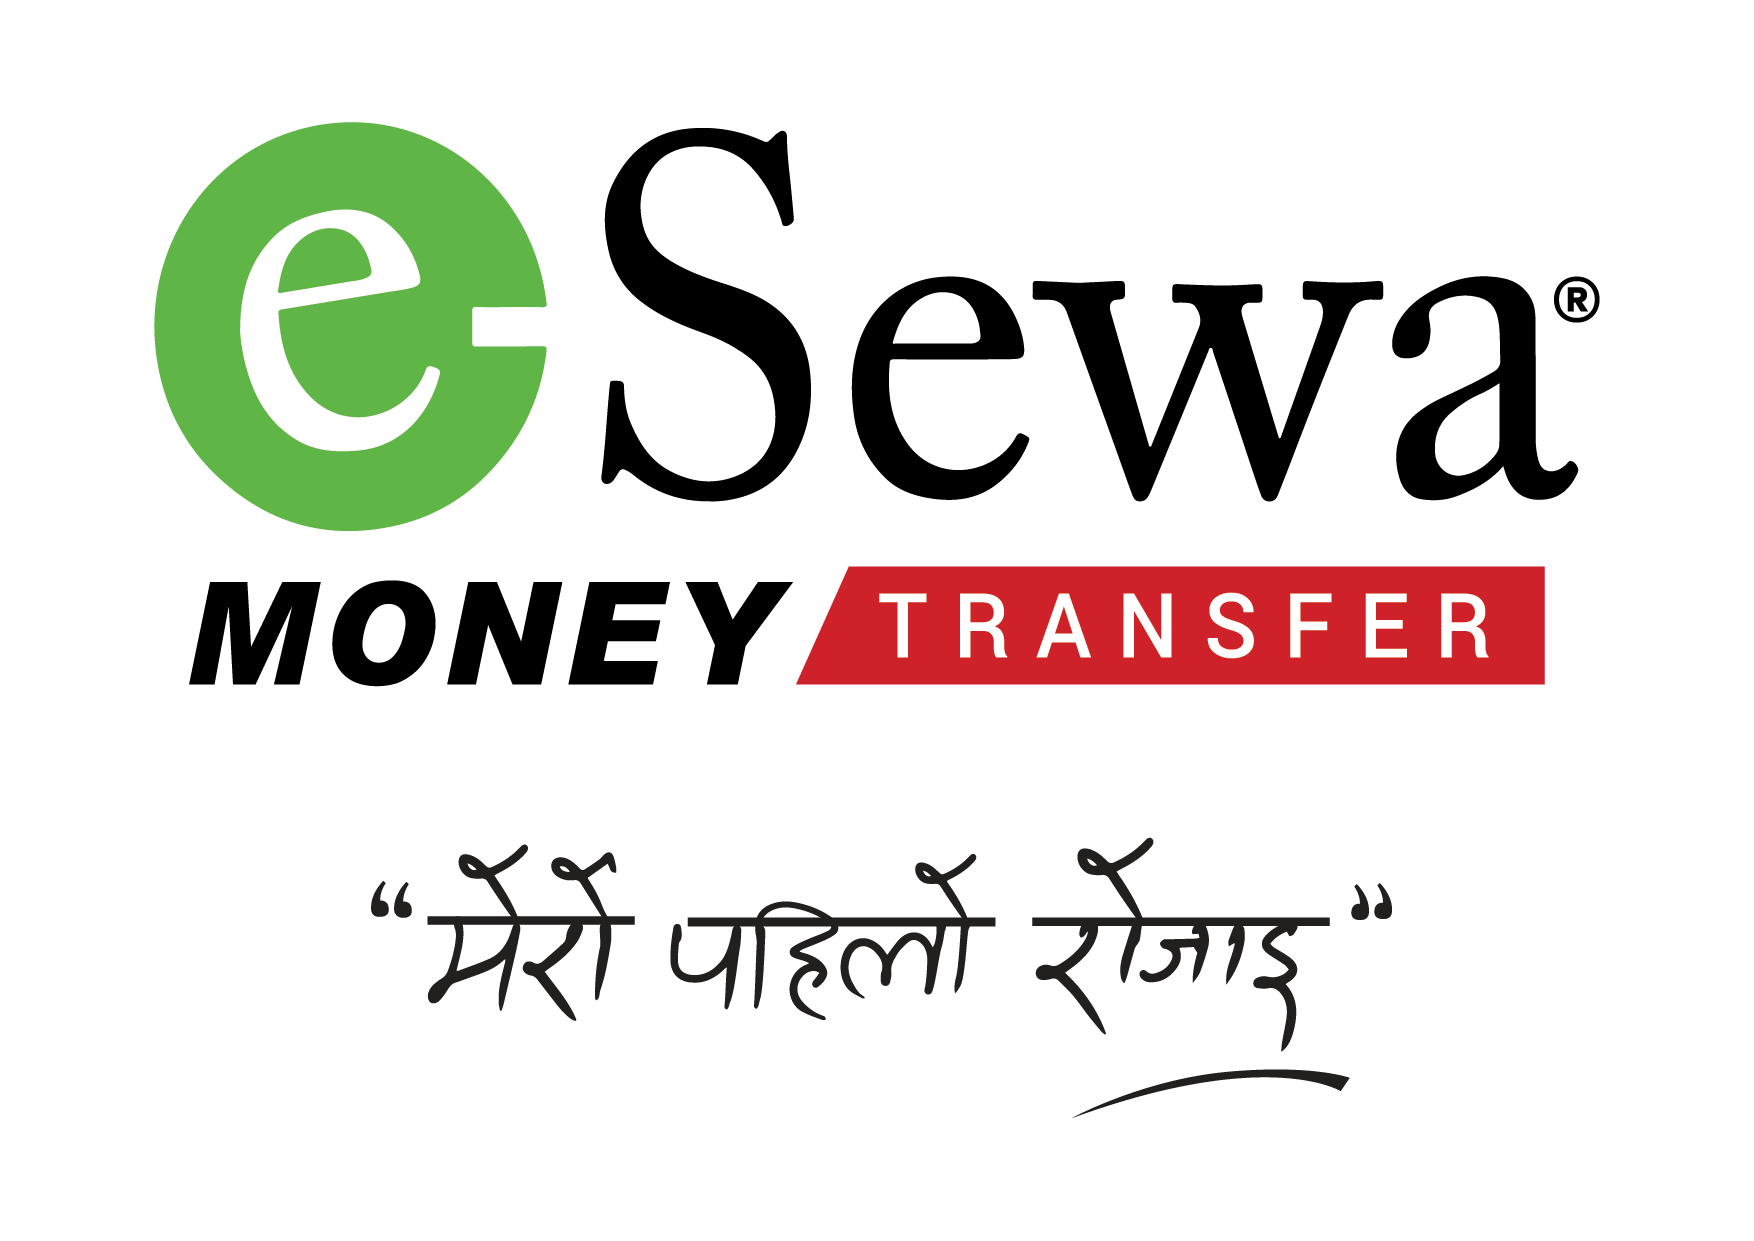 Esewa Money Transfer - Logo 2